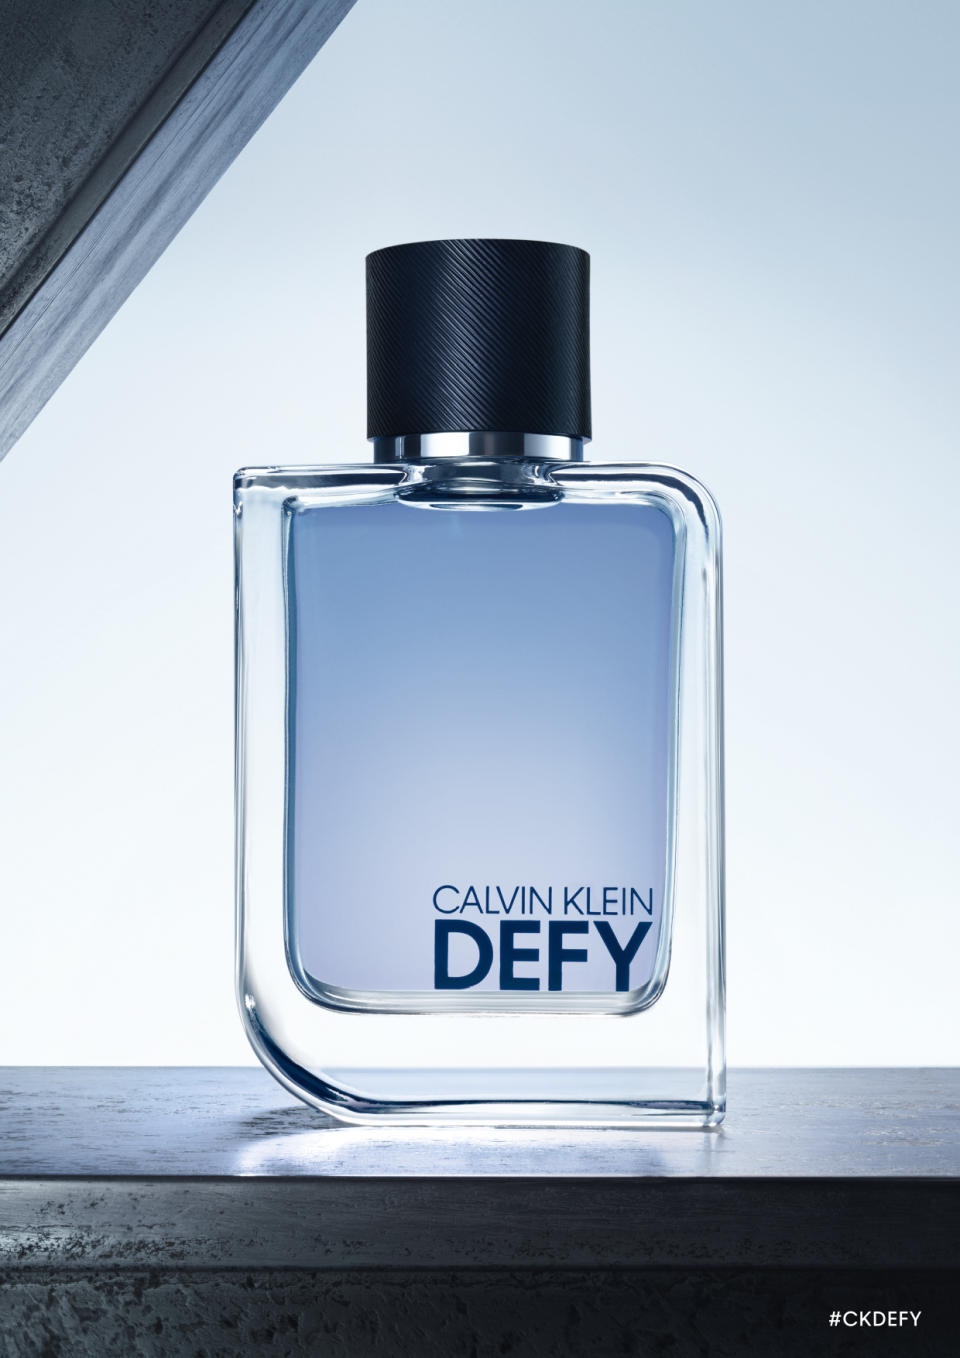 Calvin Klein’s new standalone men’s fragrance, Defy. - Credit: Image Courtesy of Coty, Inc.